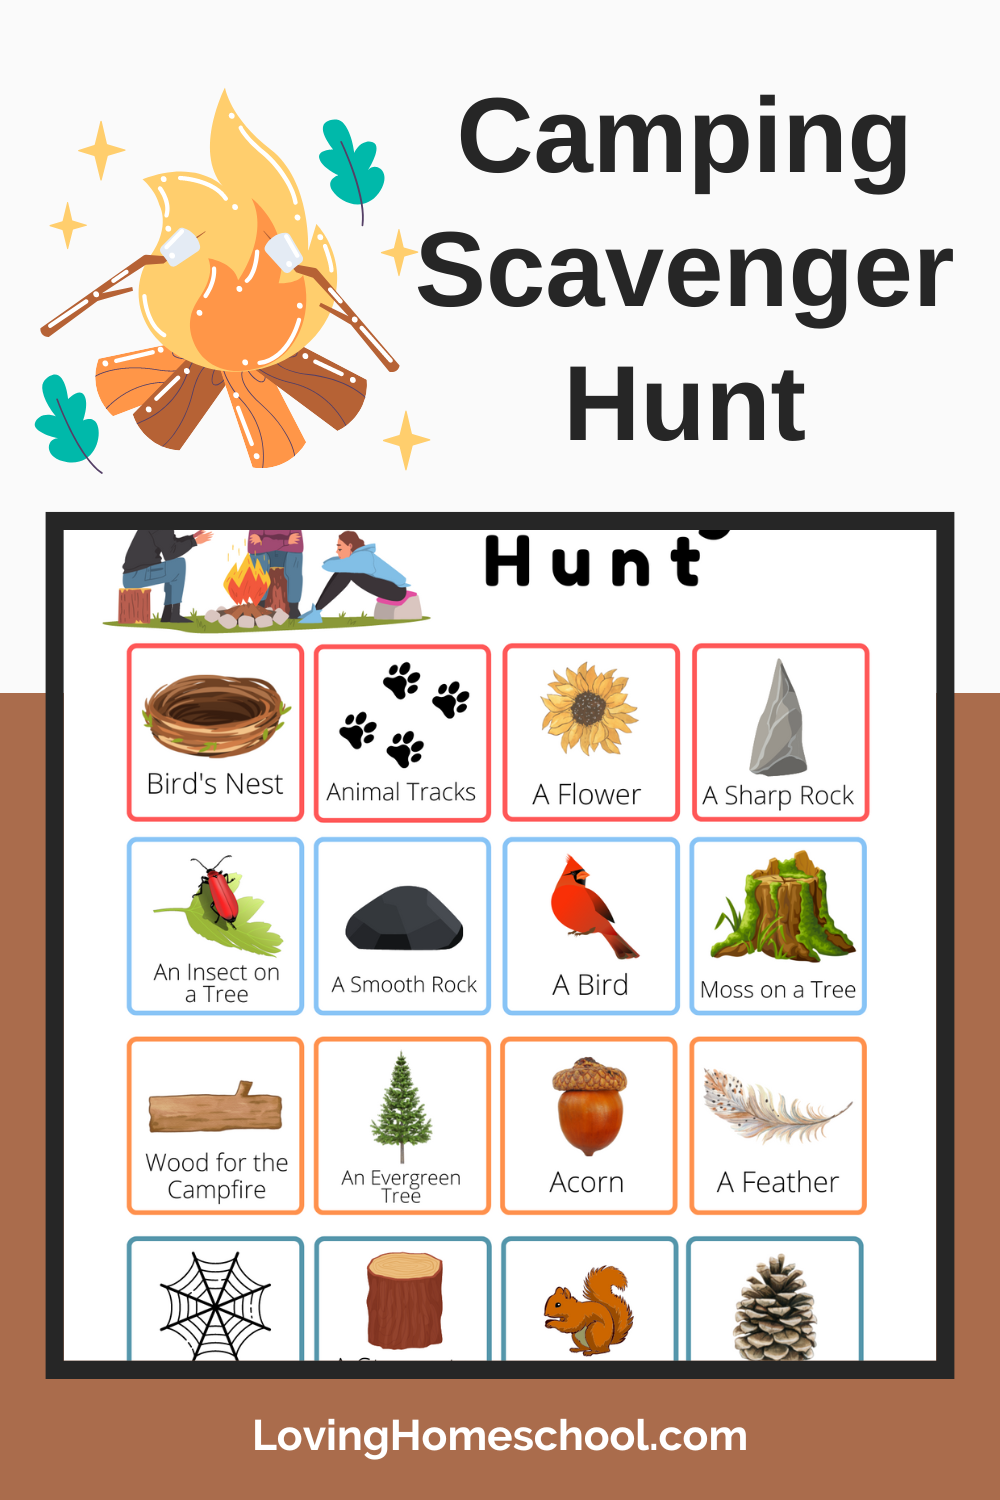 Camping Scavenger Hunt Pinterest Pin